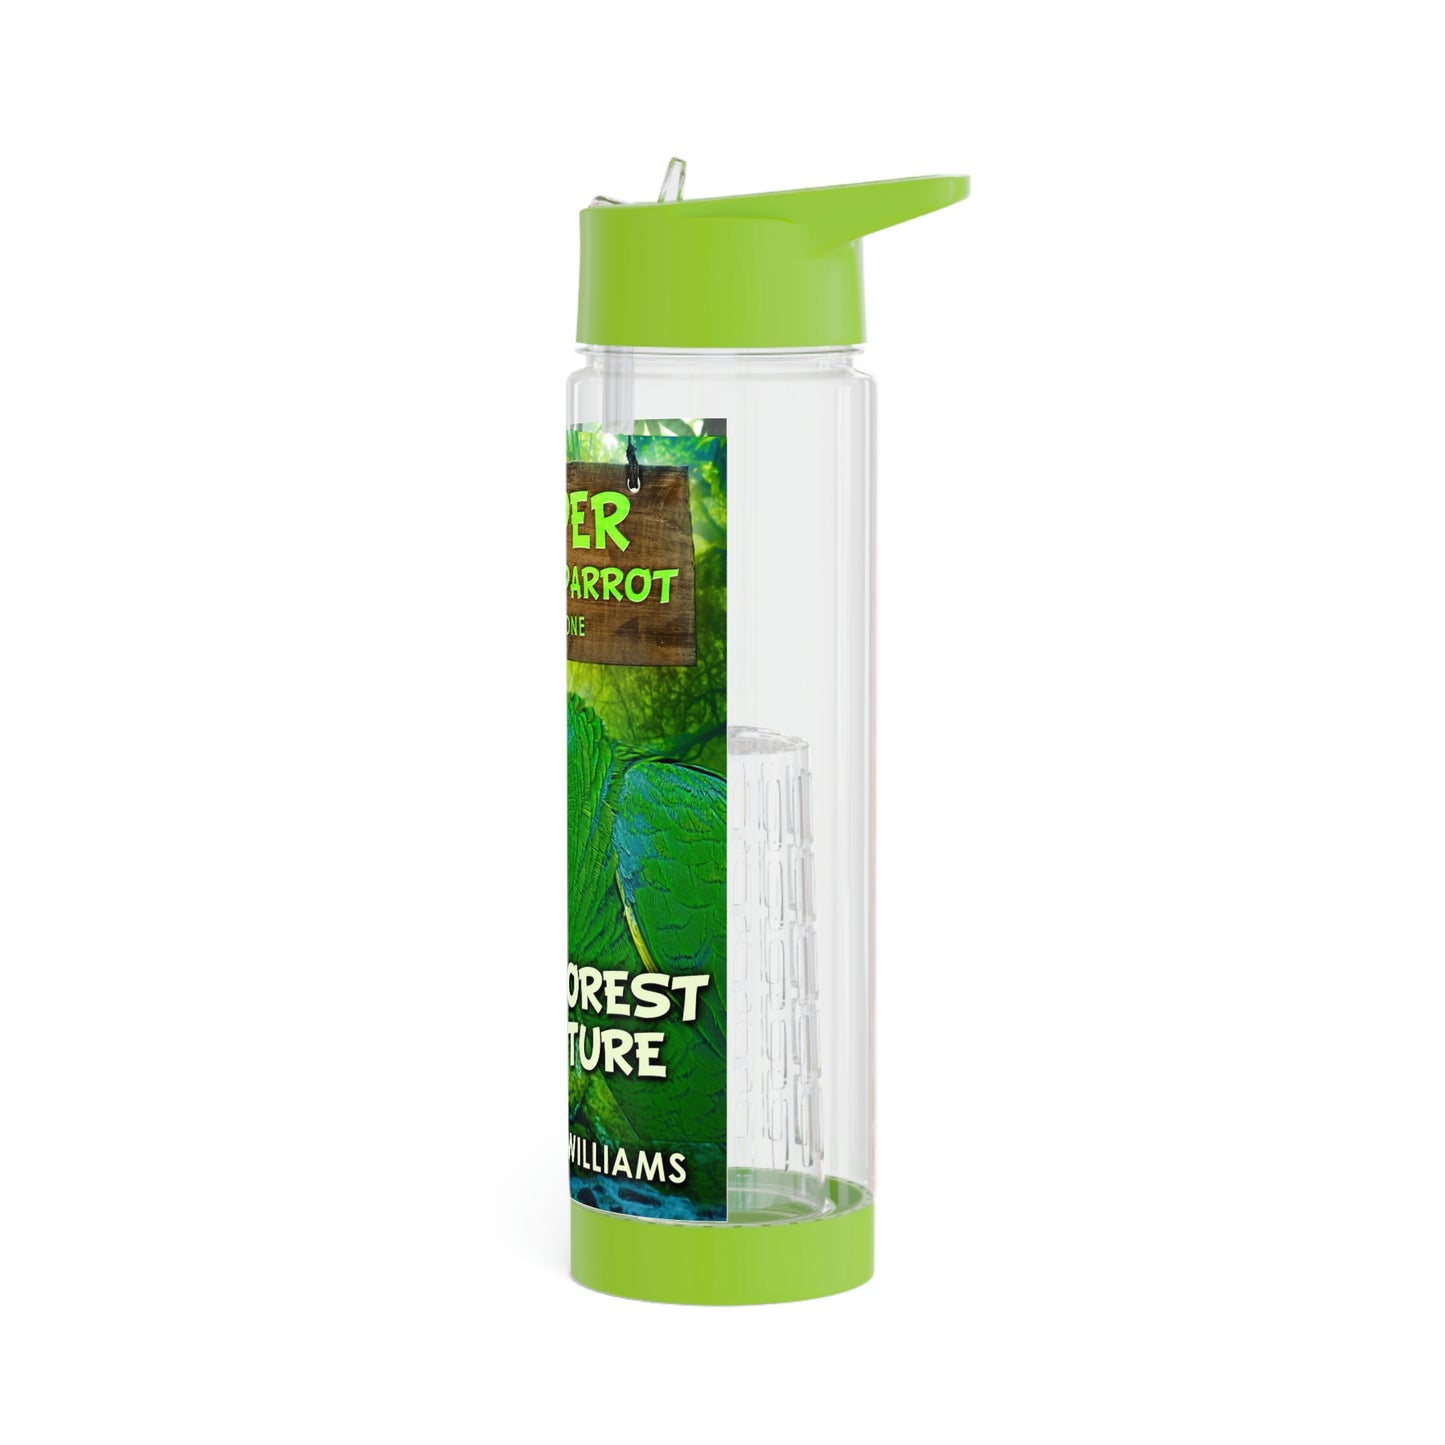 A Rainforest Adventure - Infuser Water Bottle